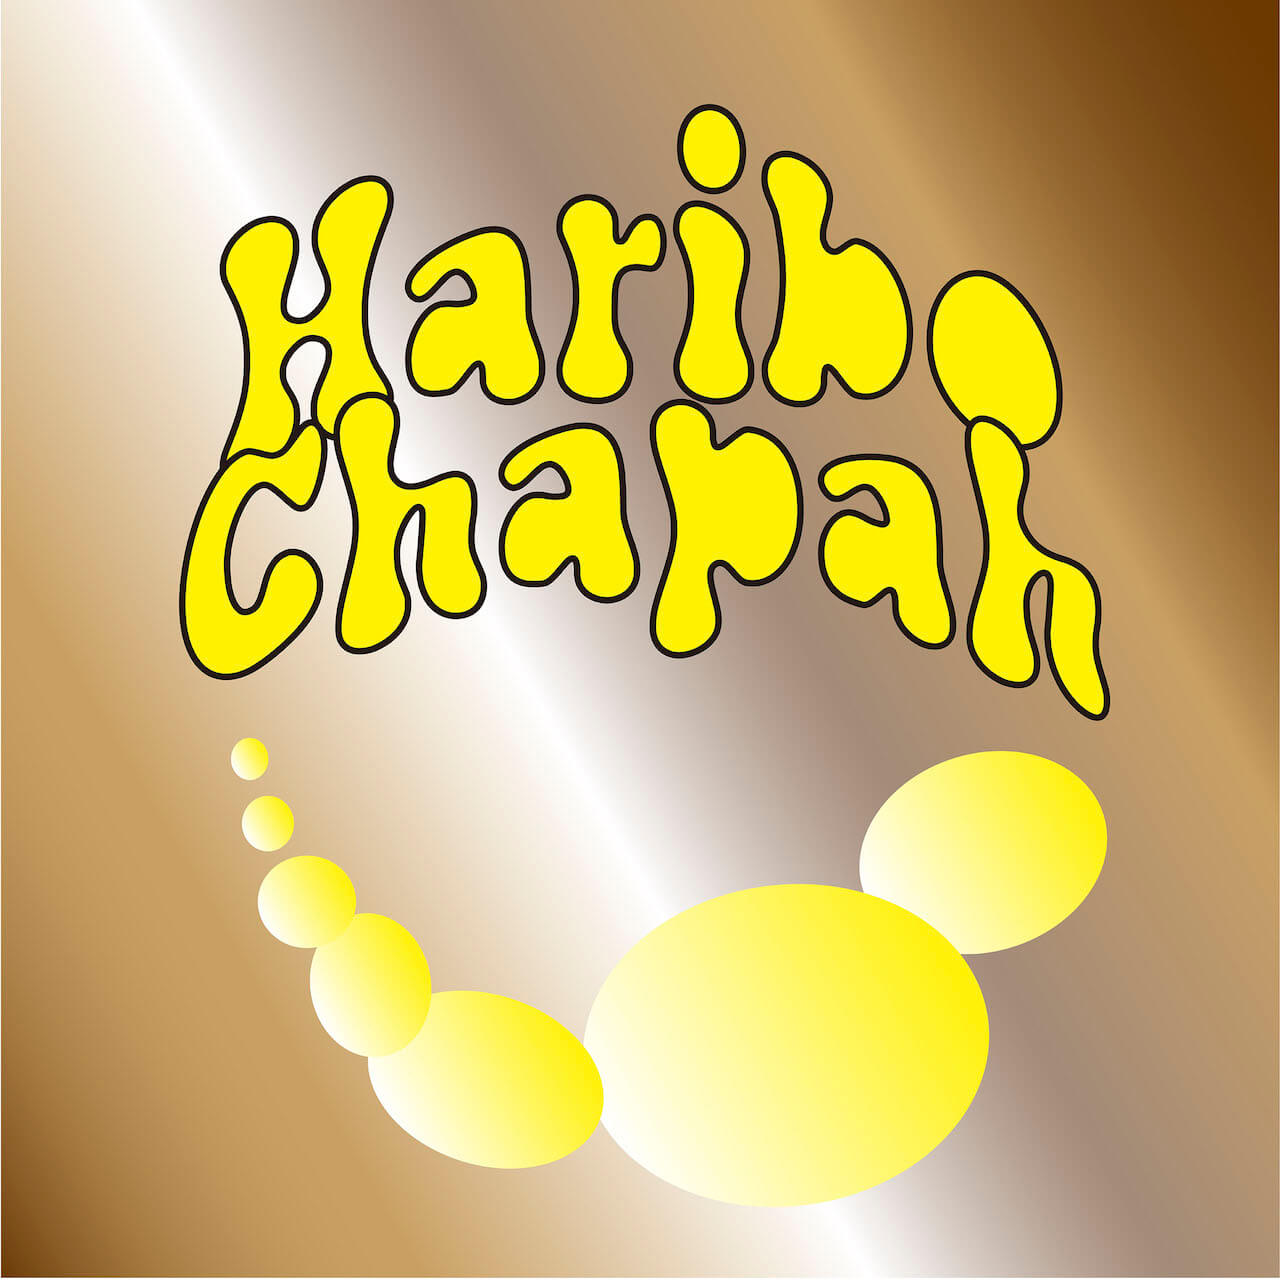 CHAPAH、JJJがプロデュースするシングル「Haribo」を配信リリース music210728-chapah-jjj-2